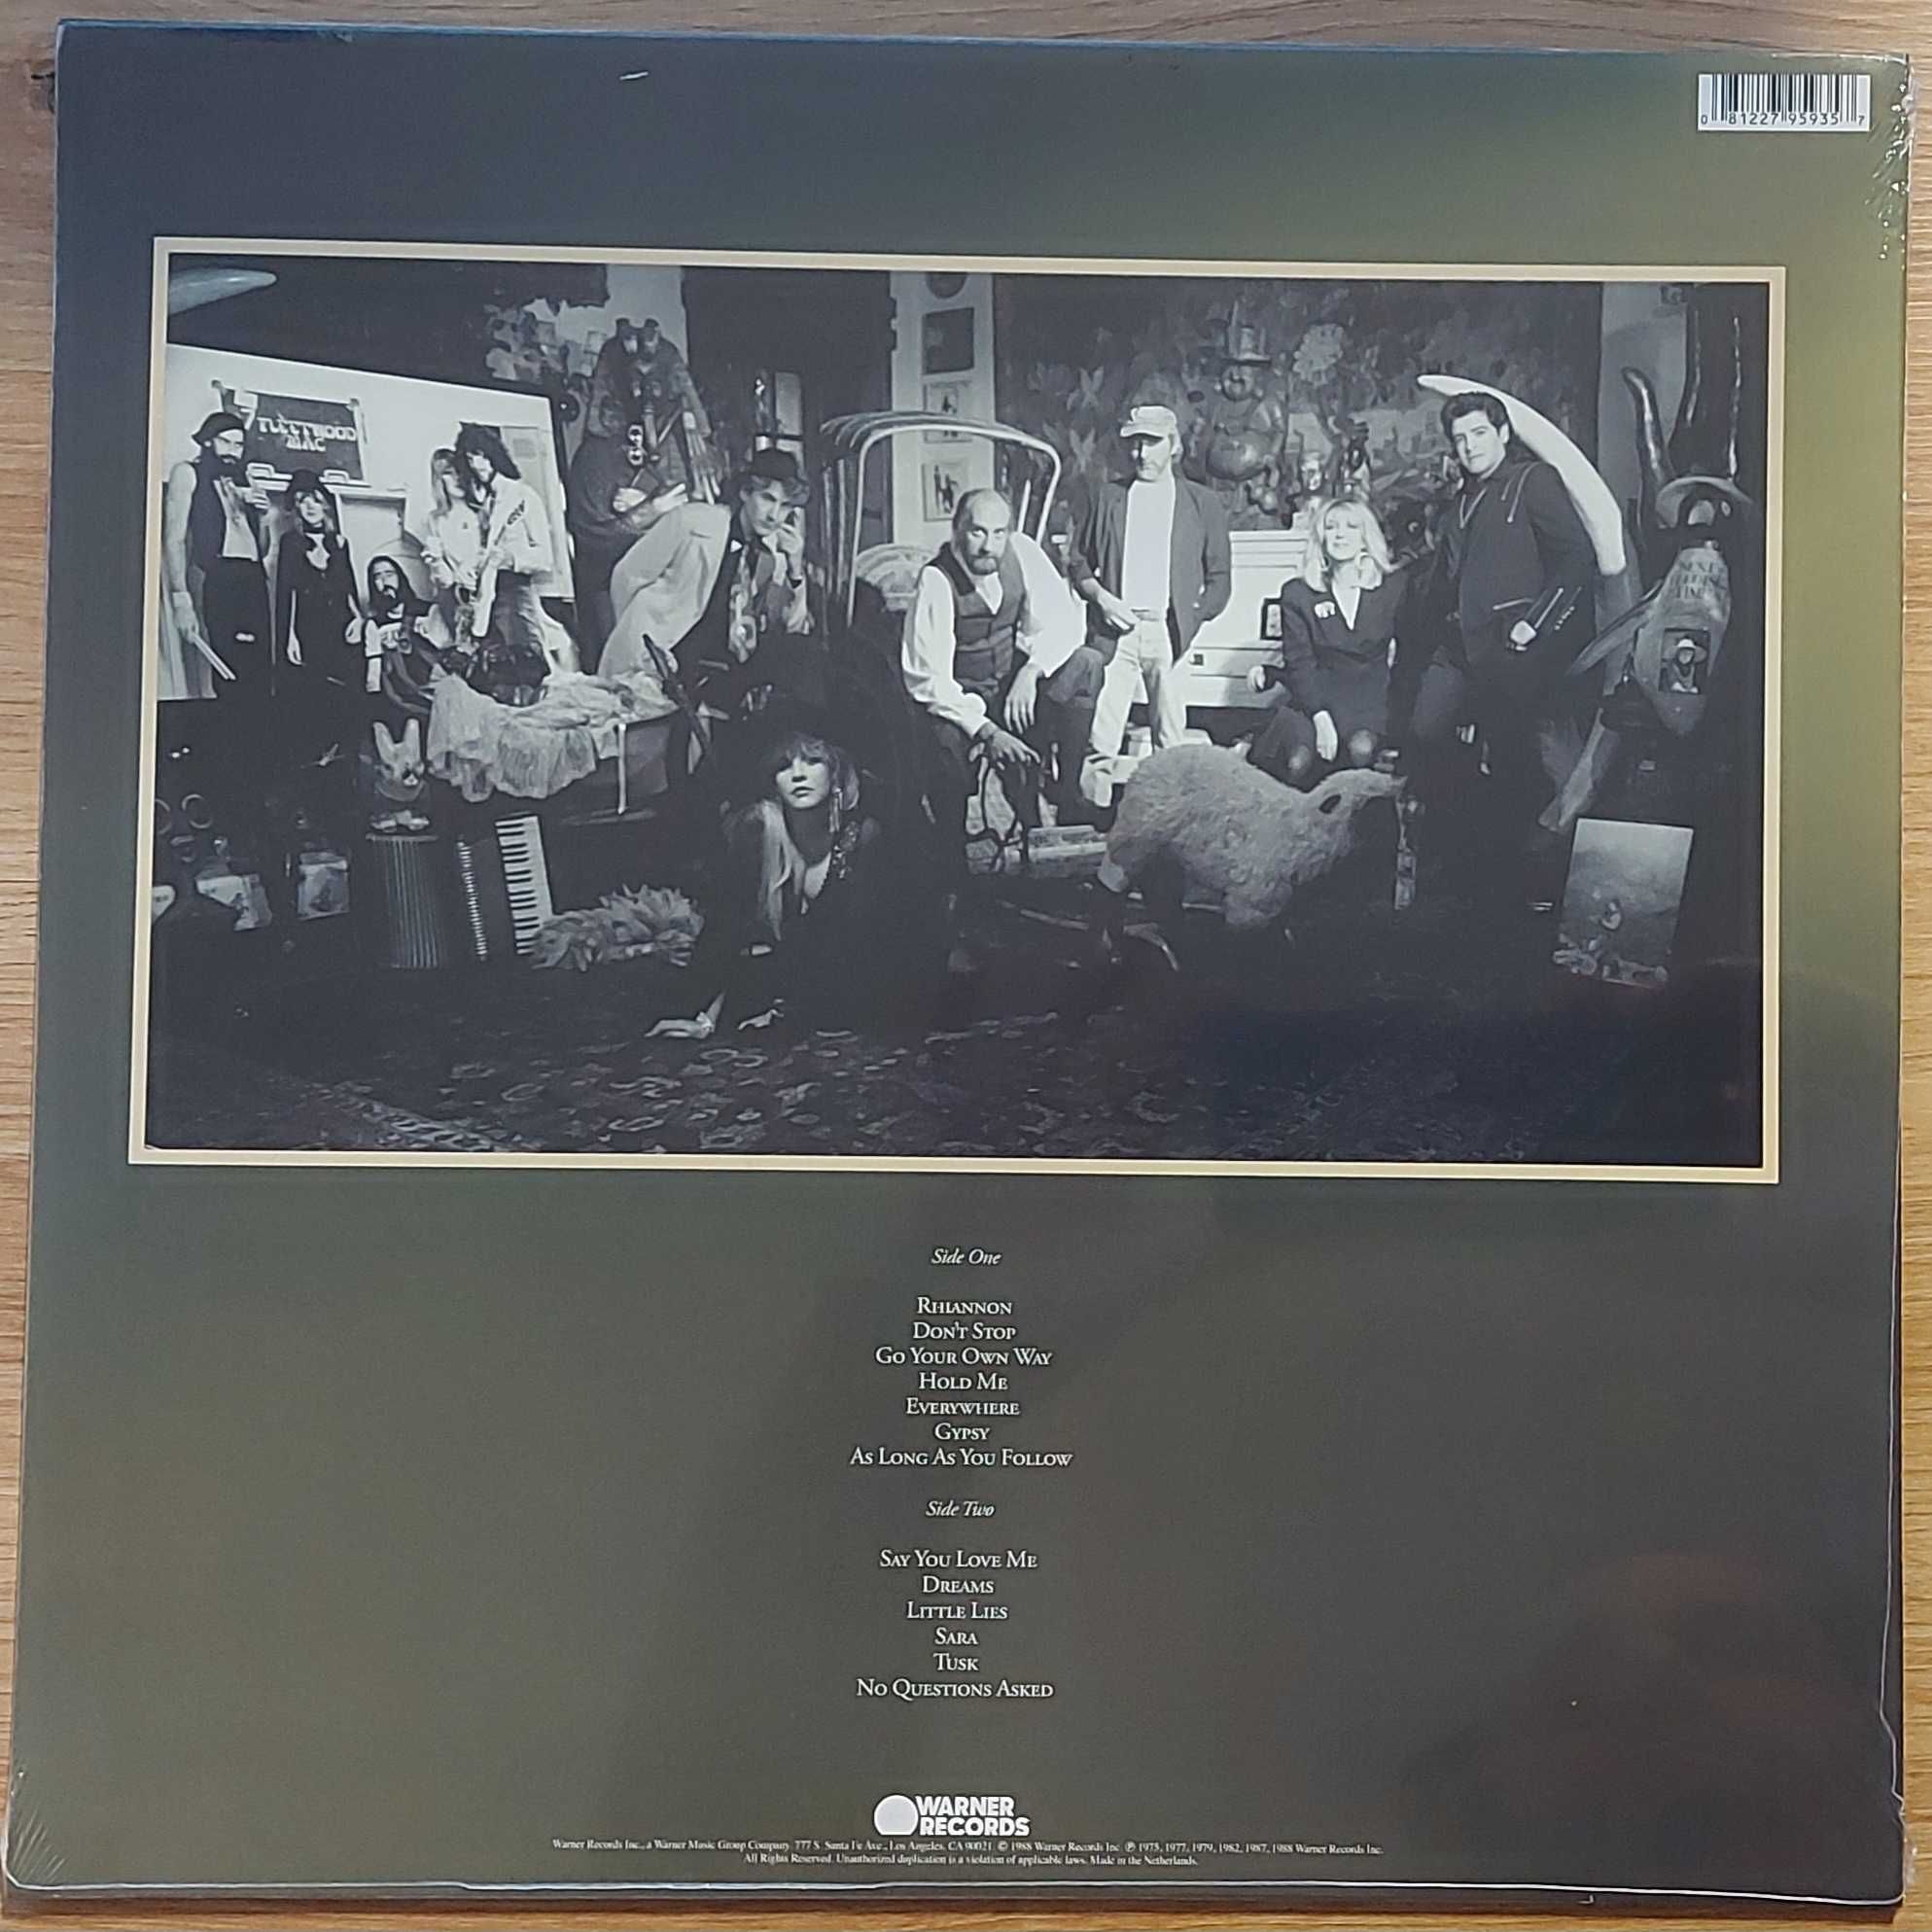 Fleetwood Mac – Greatest Hits LP– nowa, folia